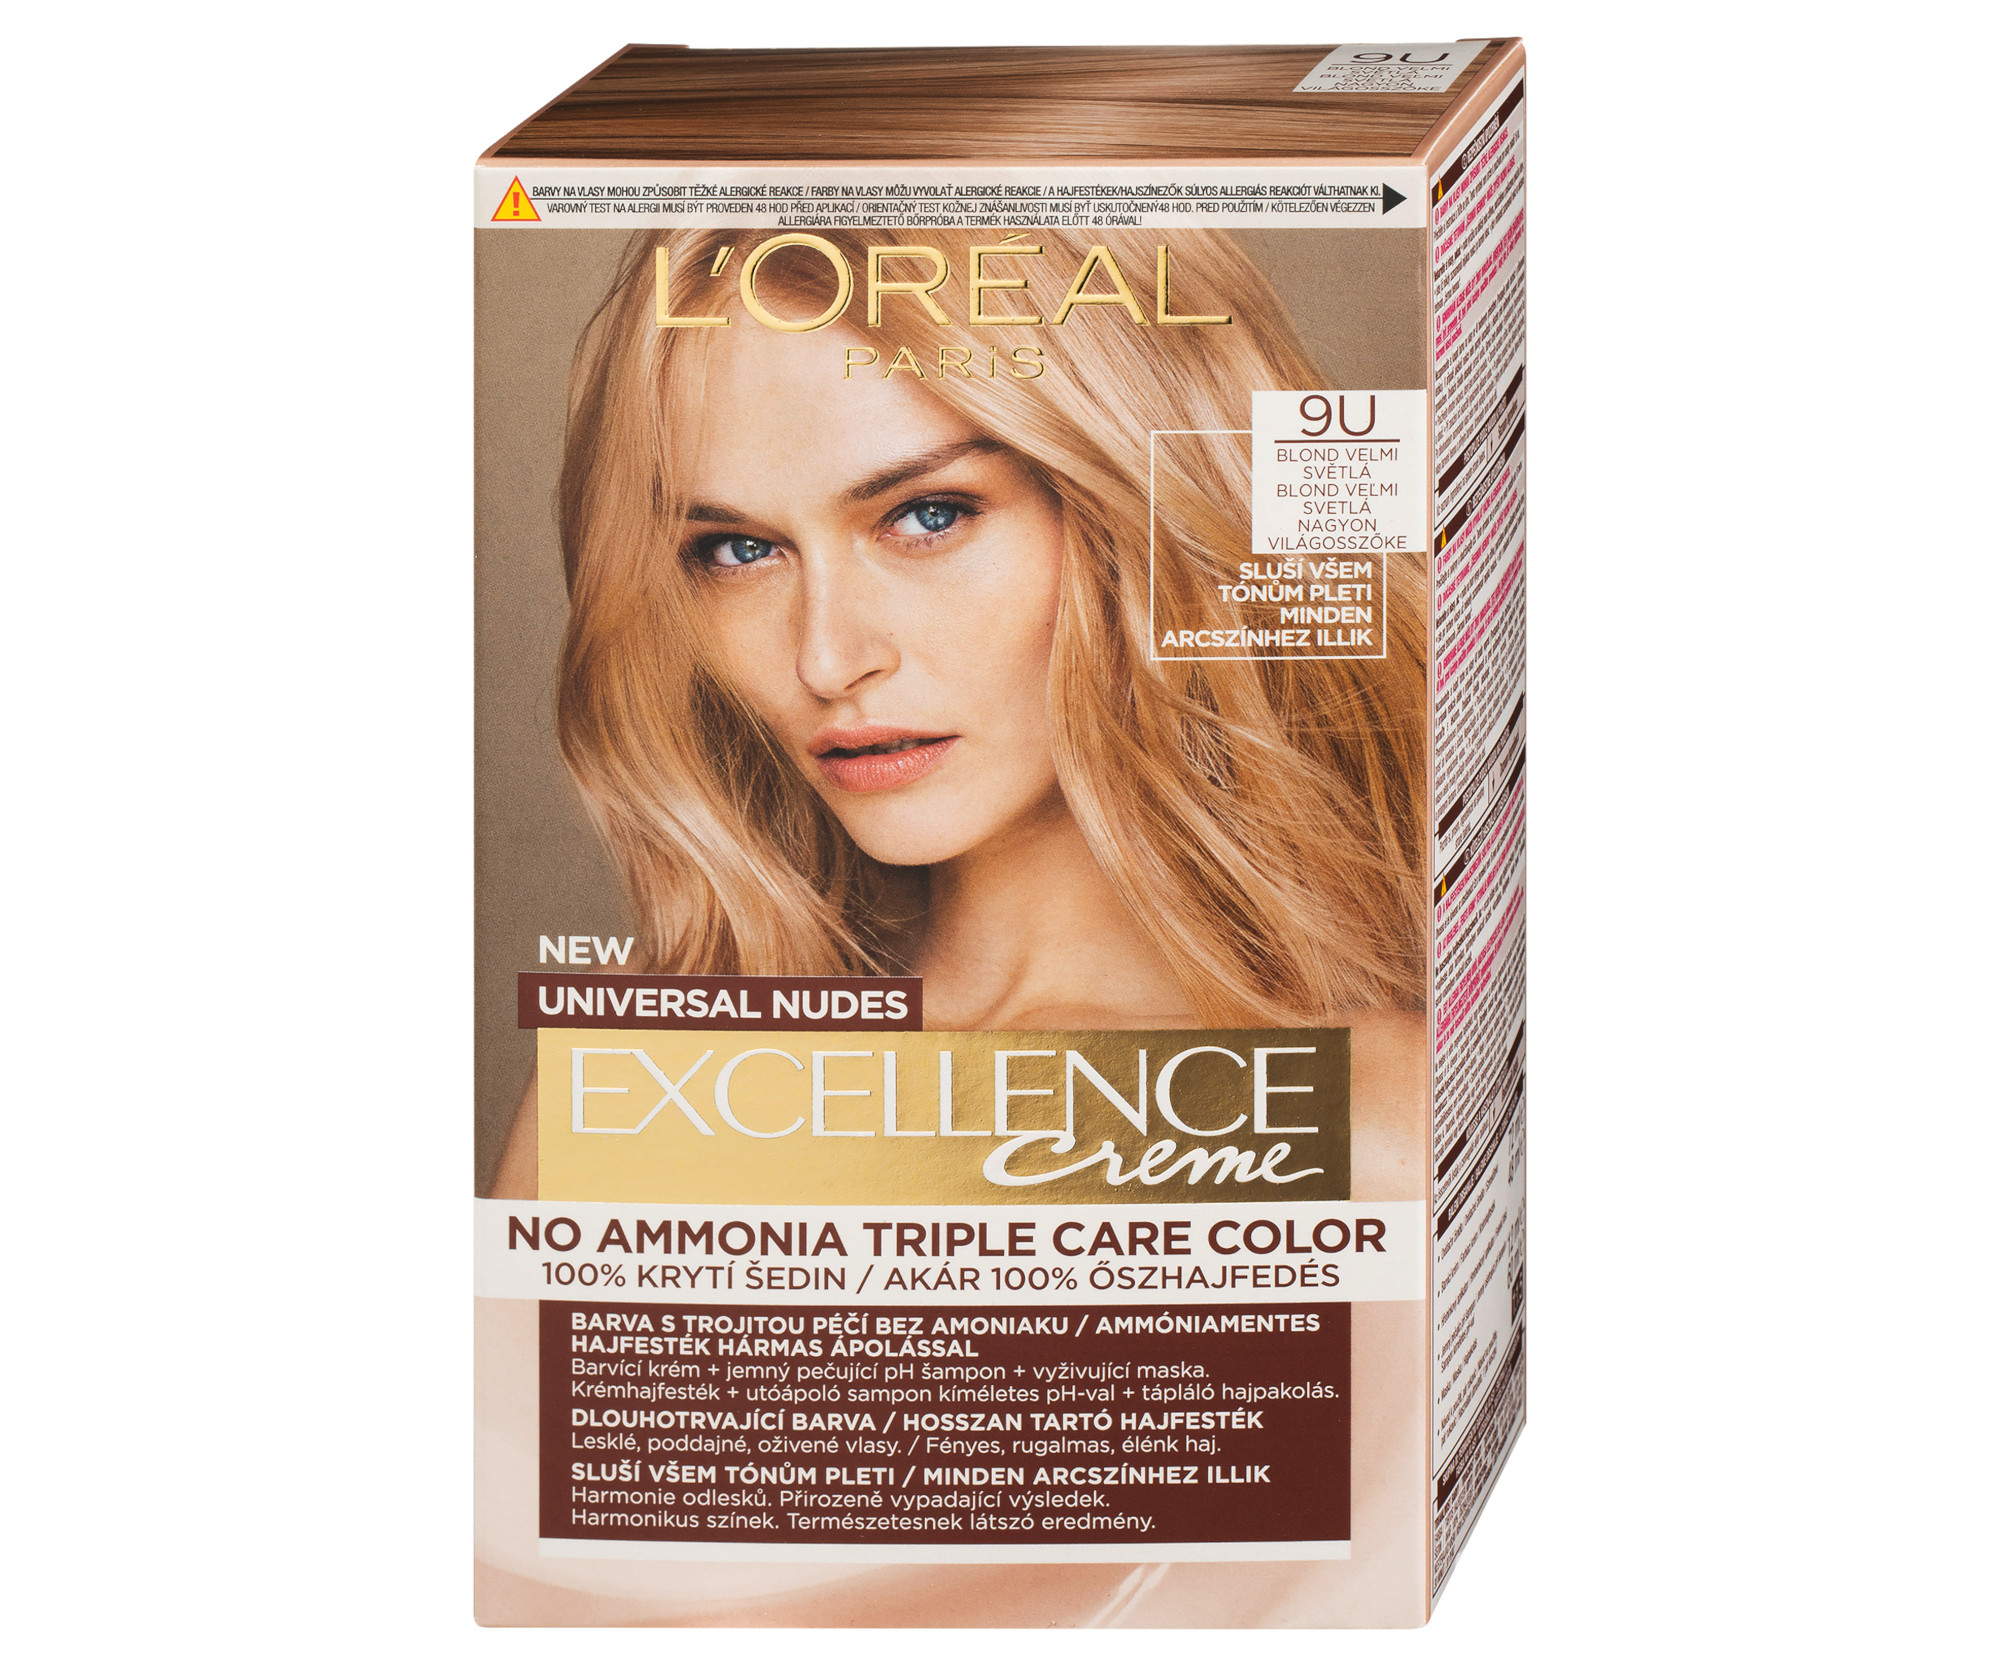 Permanentní barva Loréal Excellence Universal Nudes 9U blond velmi světlá - L’Oréal Paris + dárek zdarma